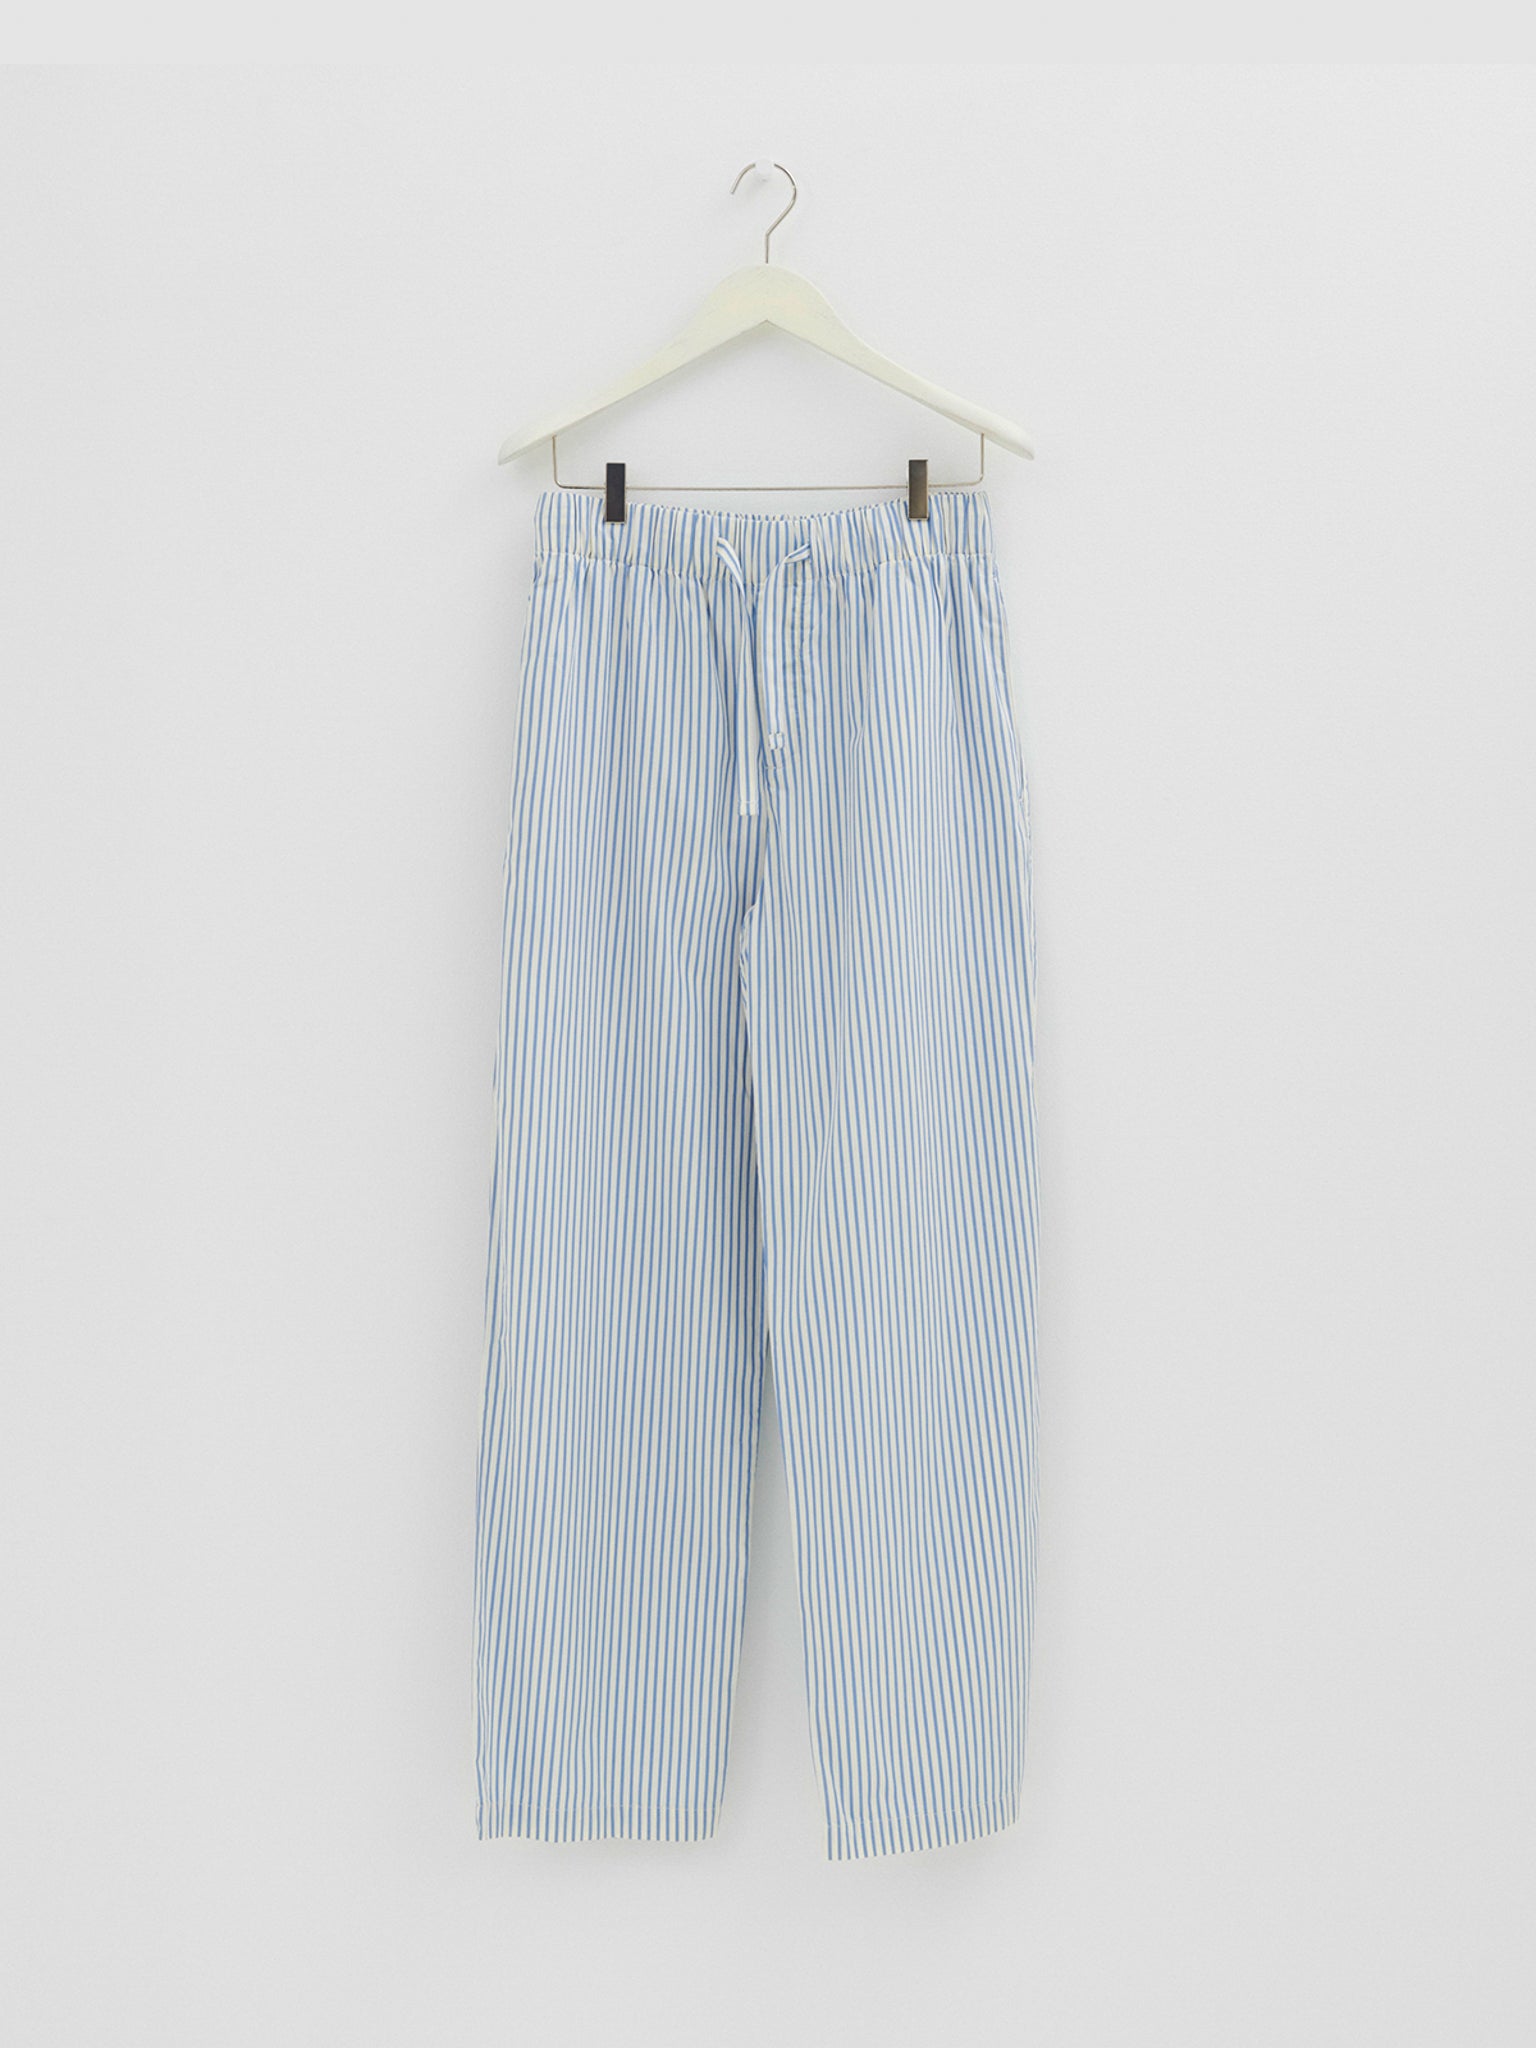 Tekla - Poplin Pyjamas Pants in Placid Blue Stripes